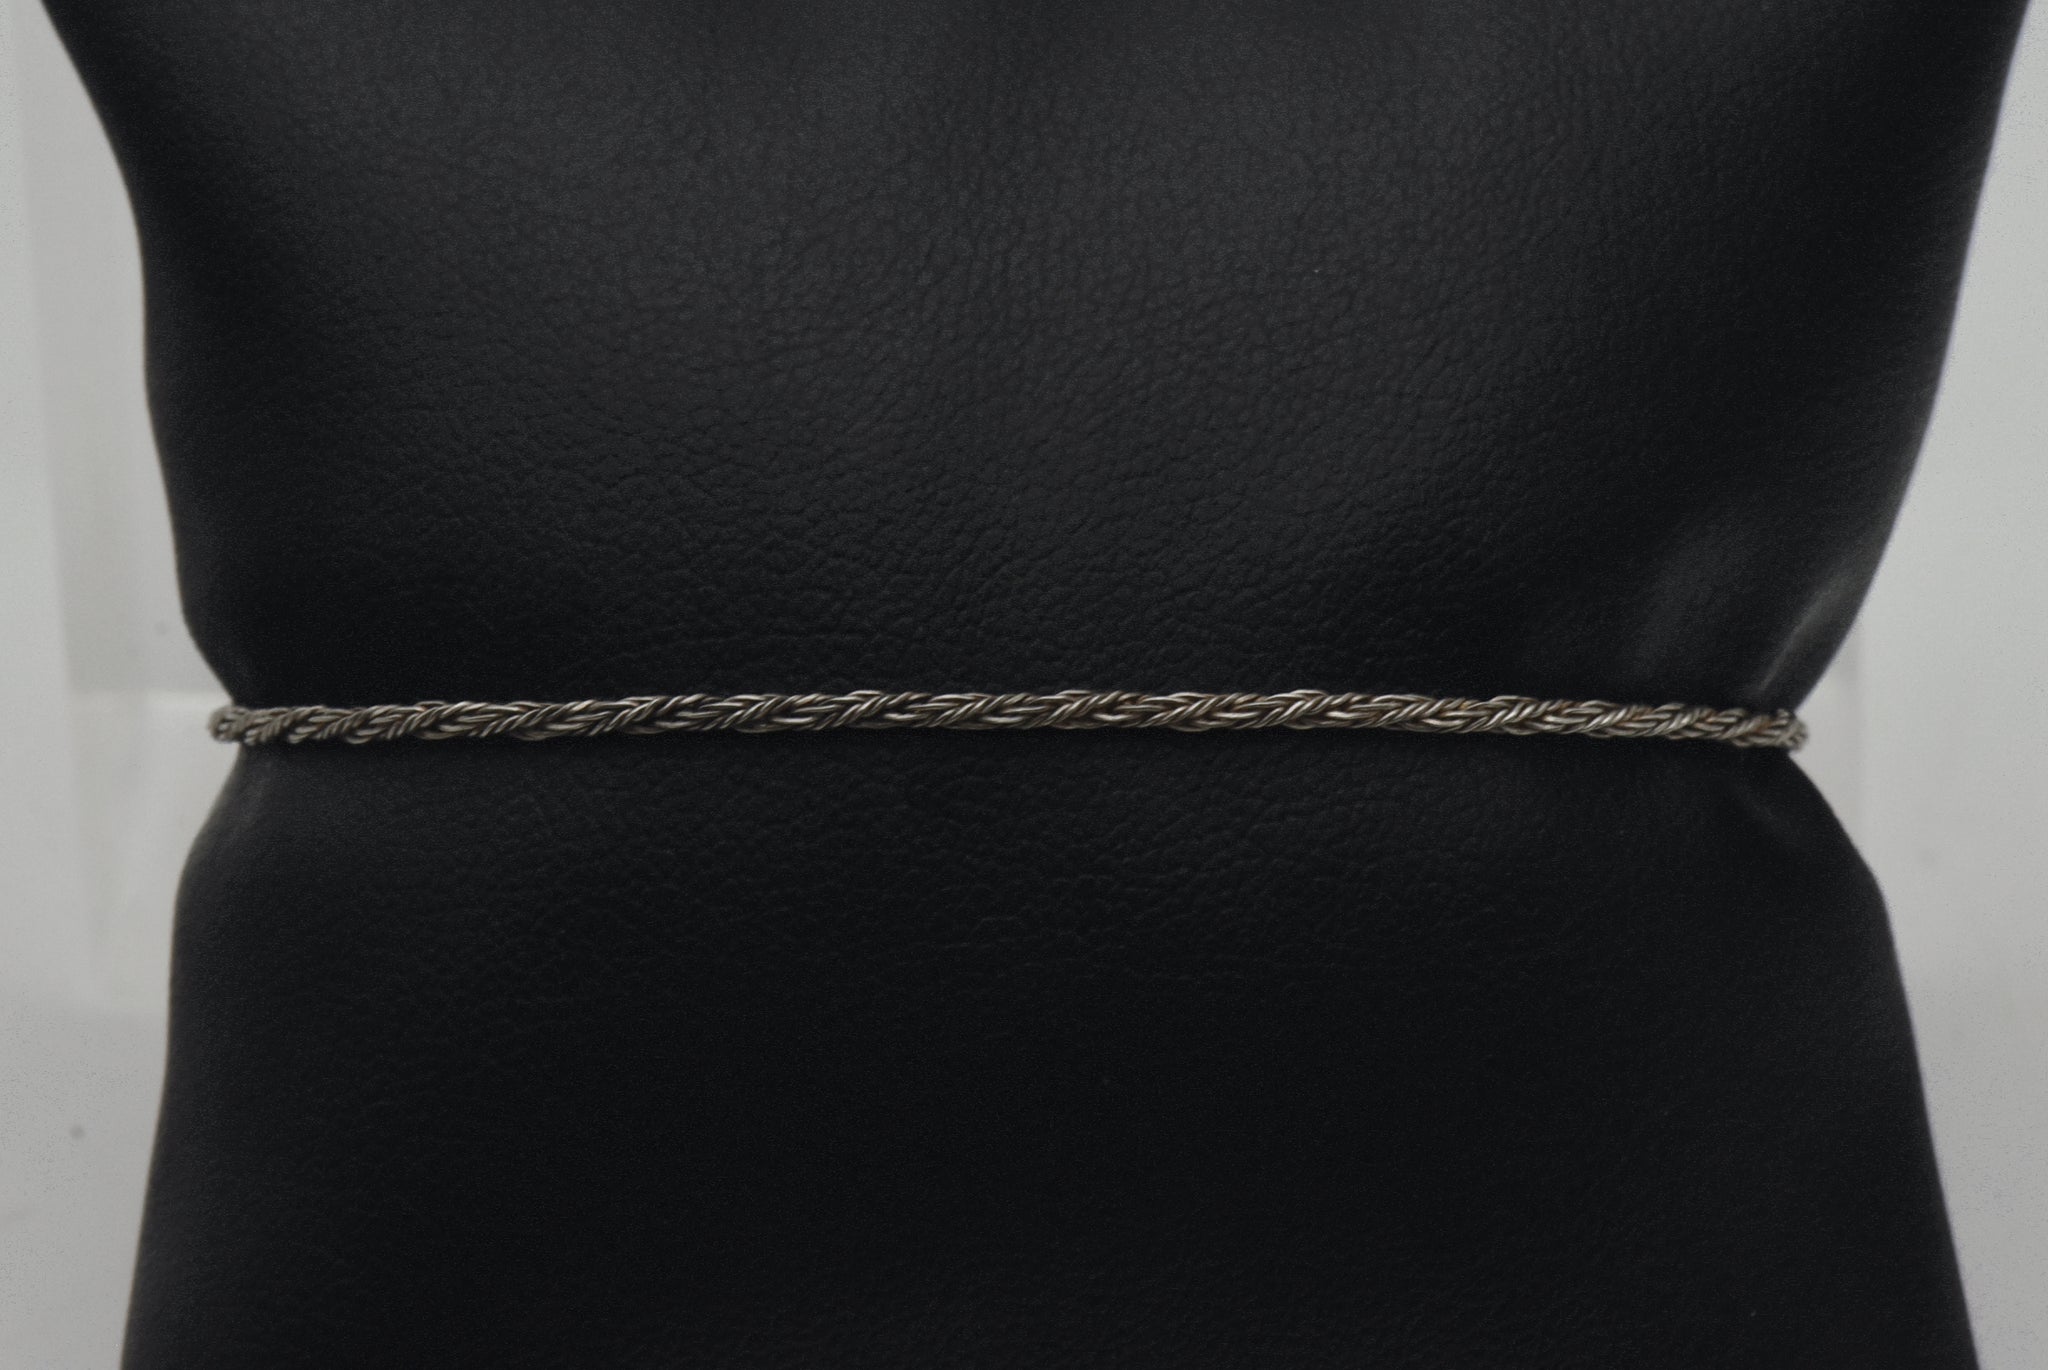 Vintage Italian Sterling Silver Rope Link Chain Bracelet